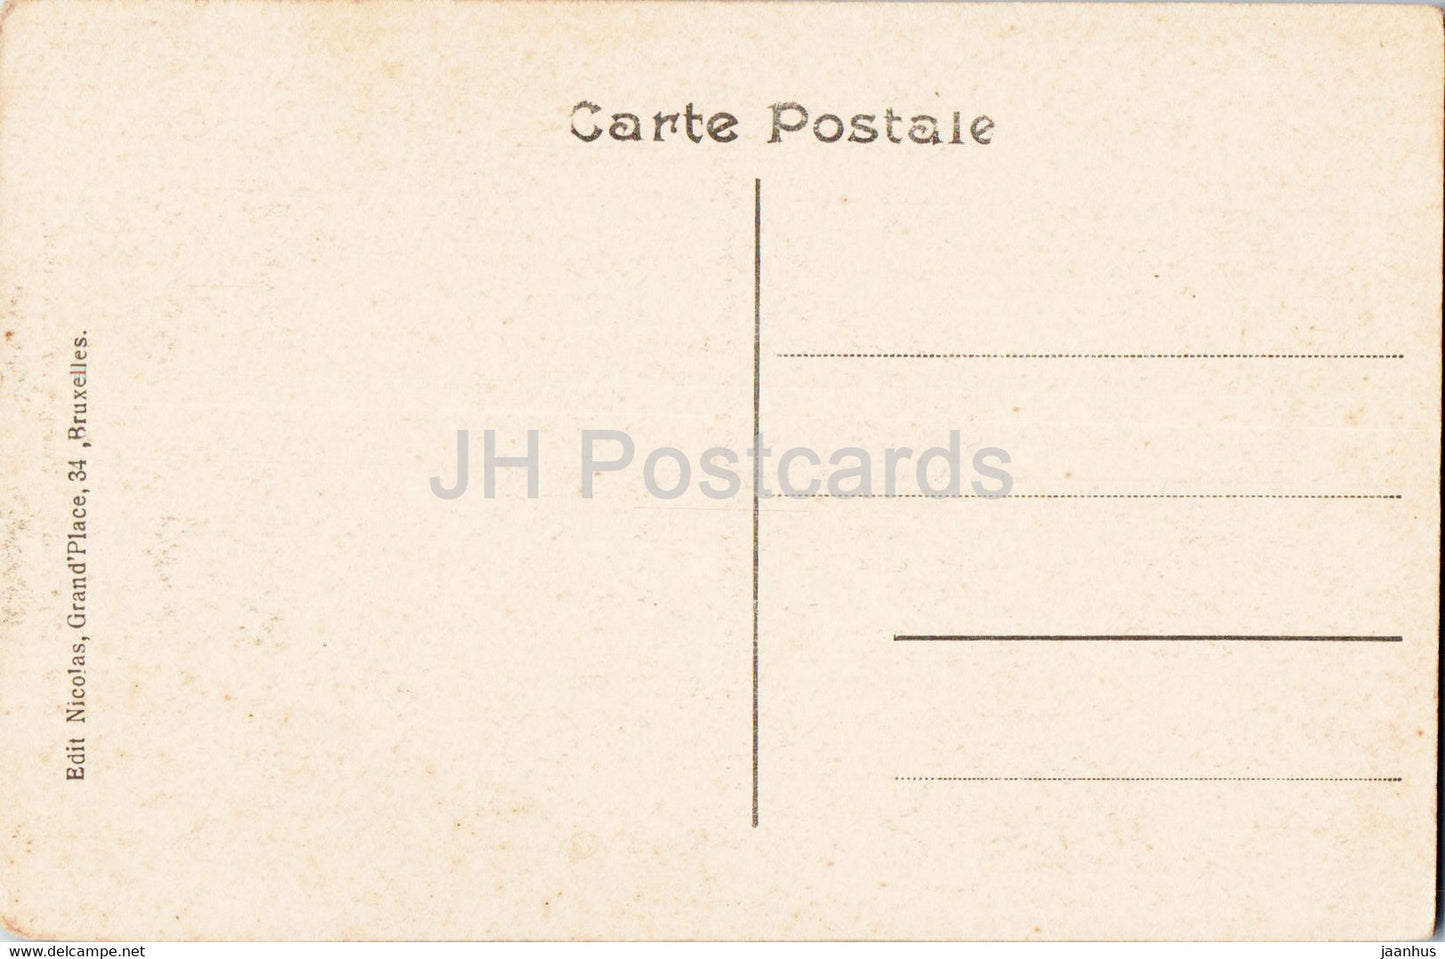 Bruxelles - Brussels - Colonne du Congres - Congress Column - old postcard - Belgium - unused